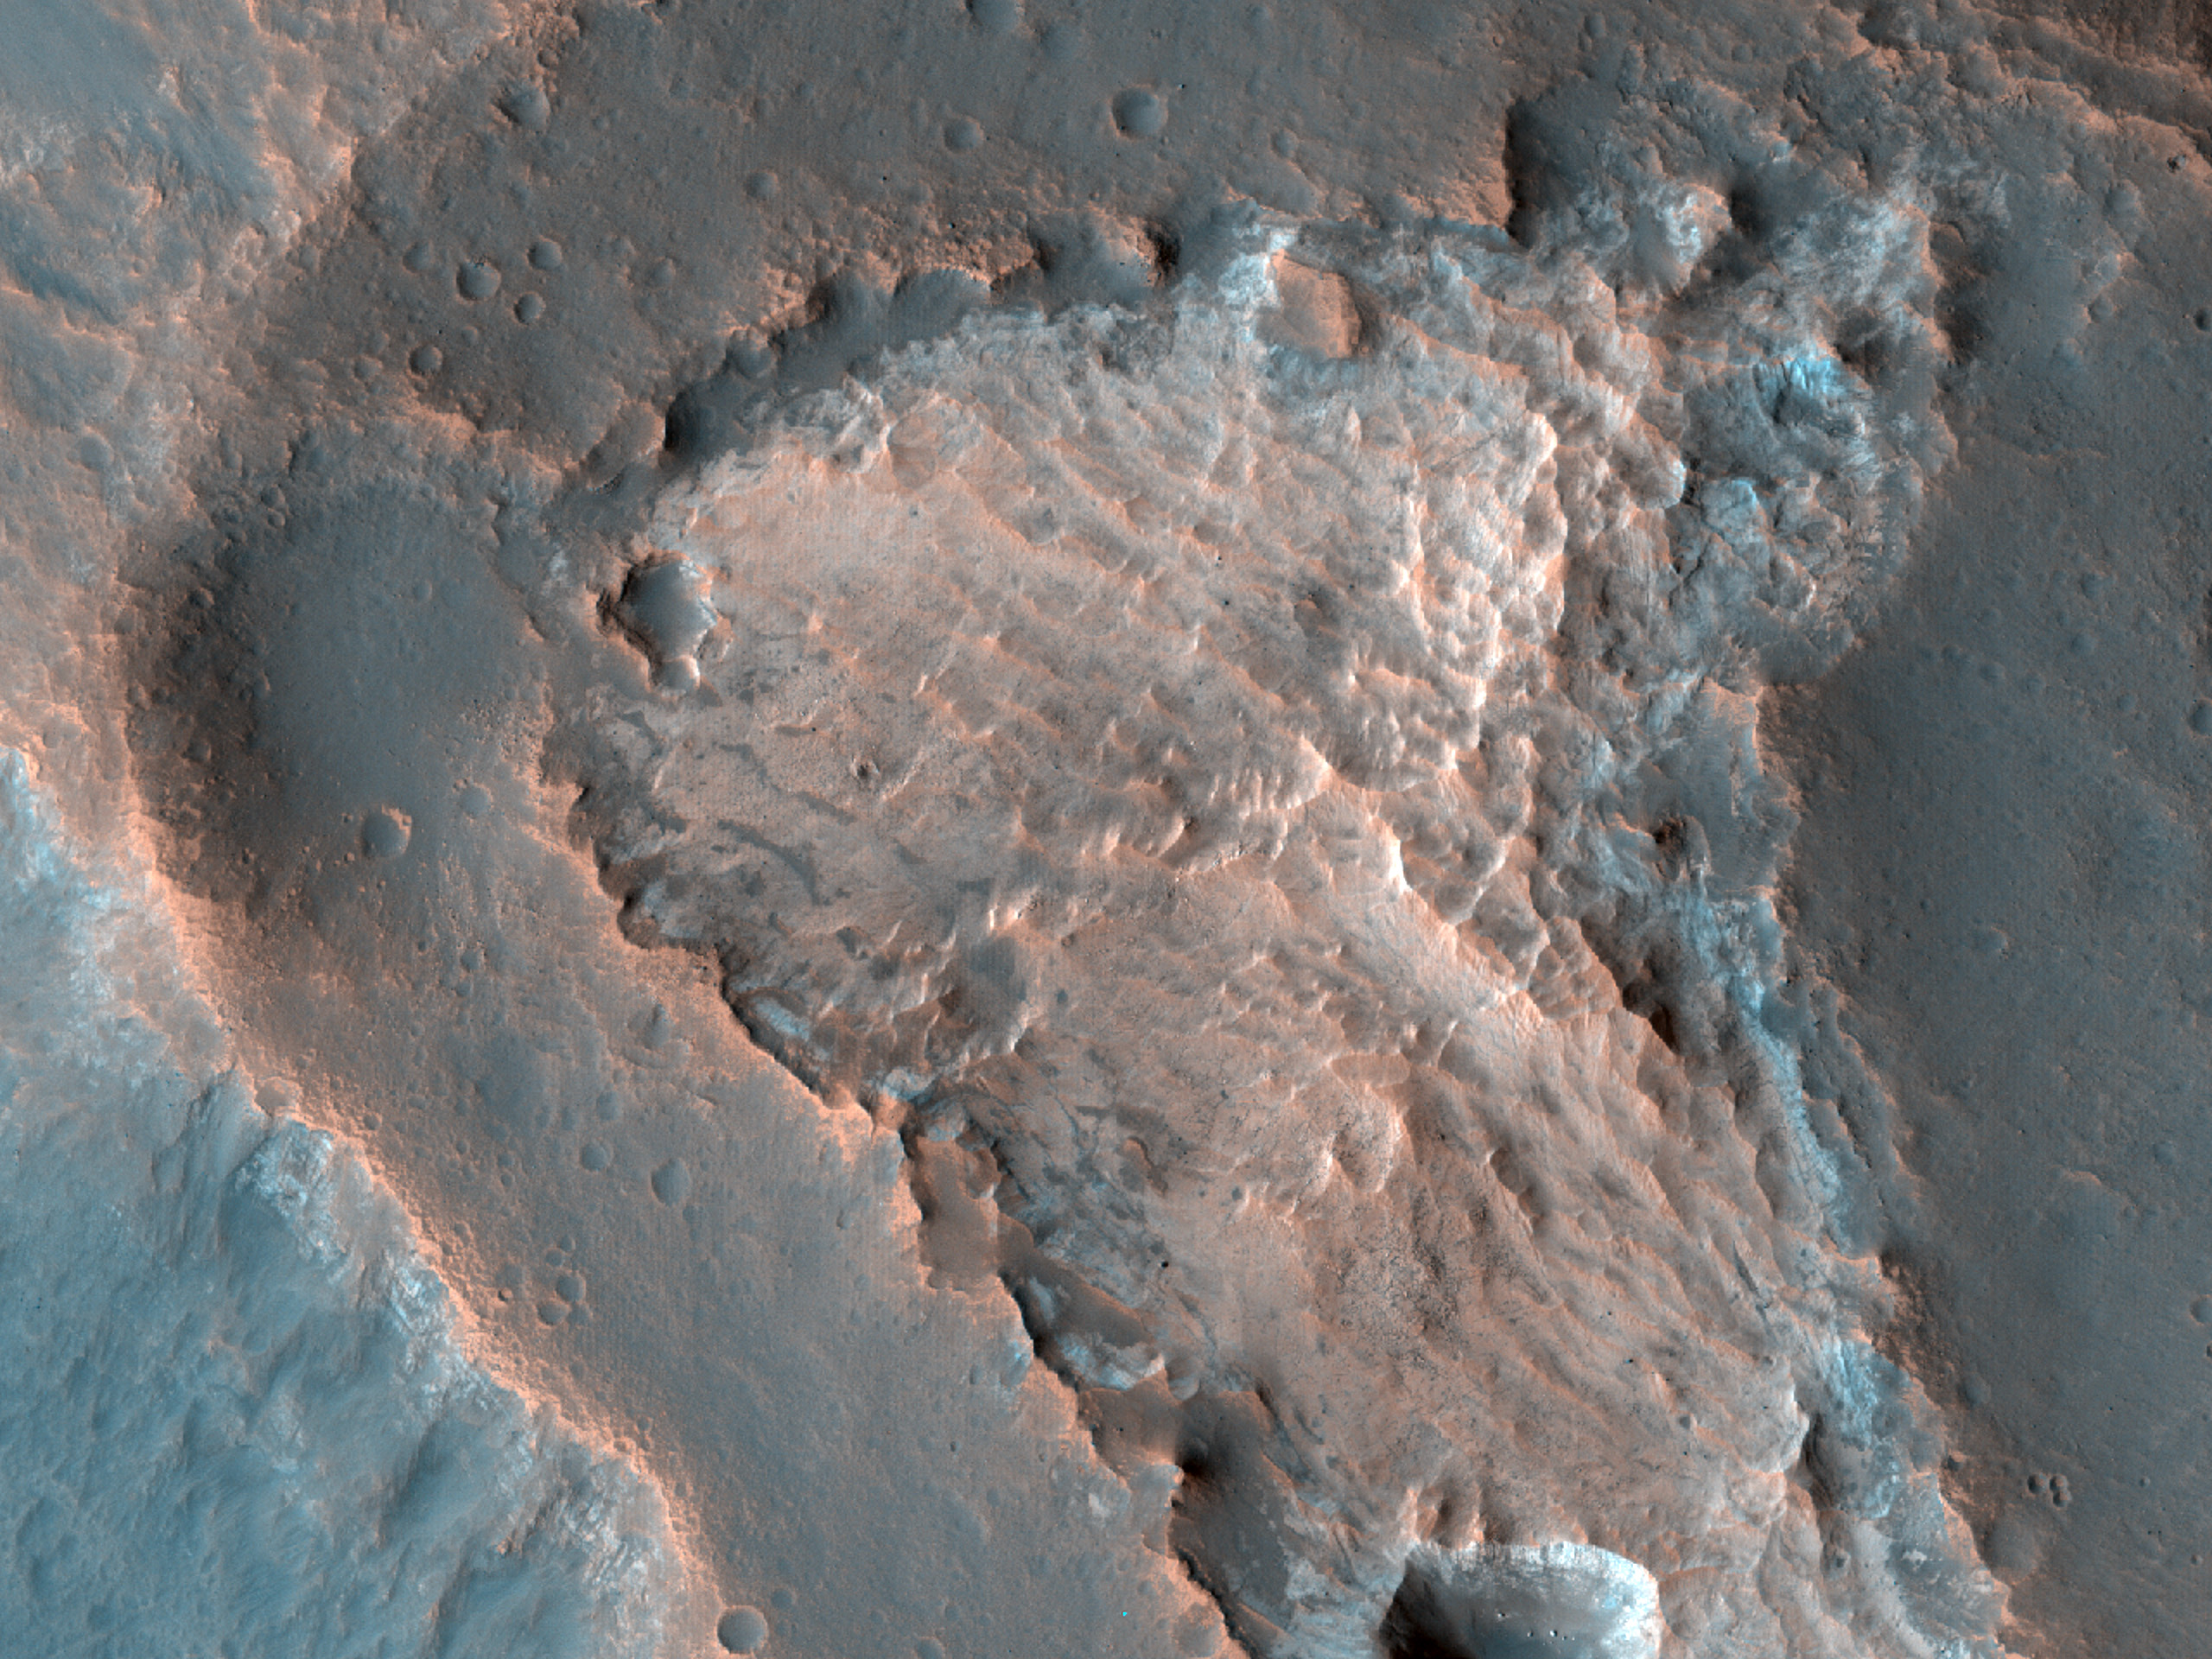 Strata in Butte in Chryse Planitia